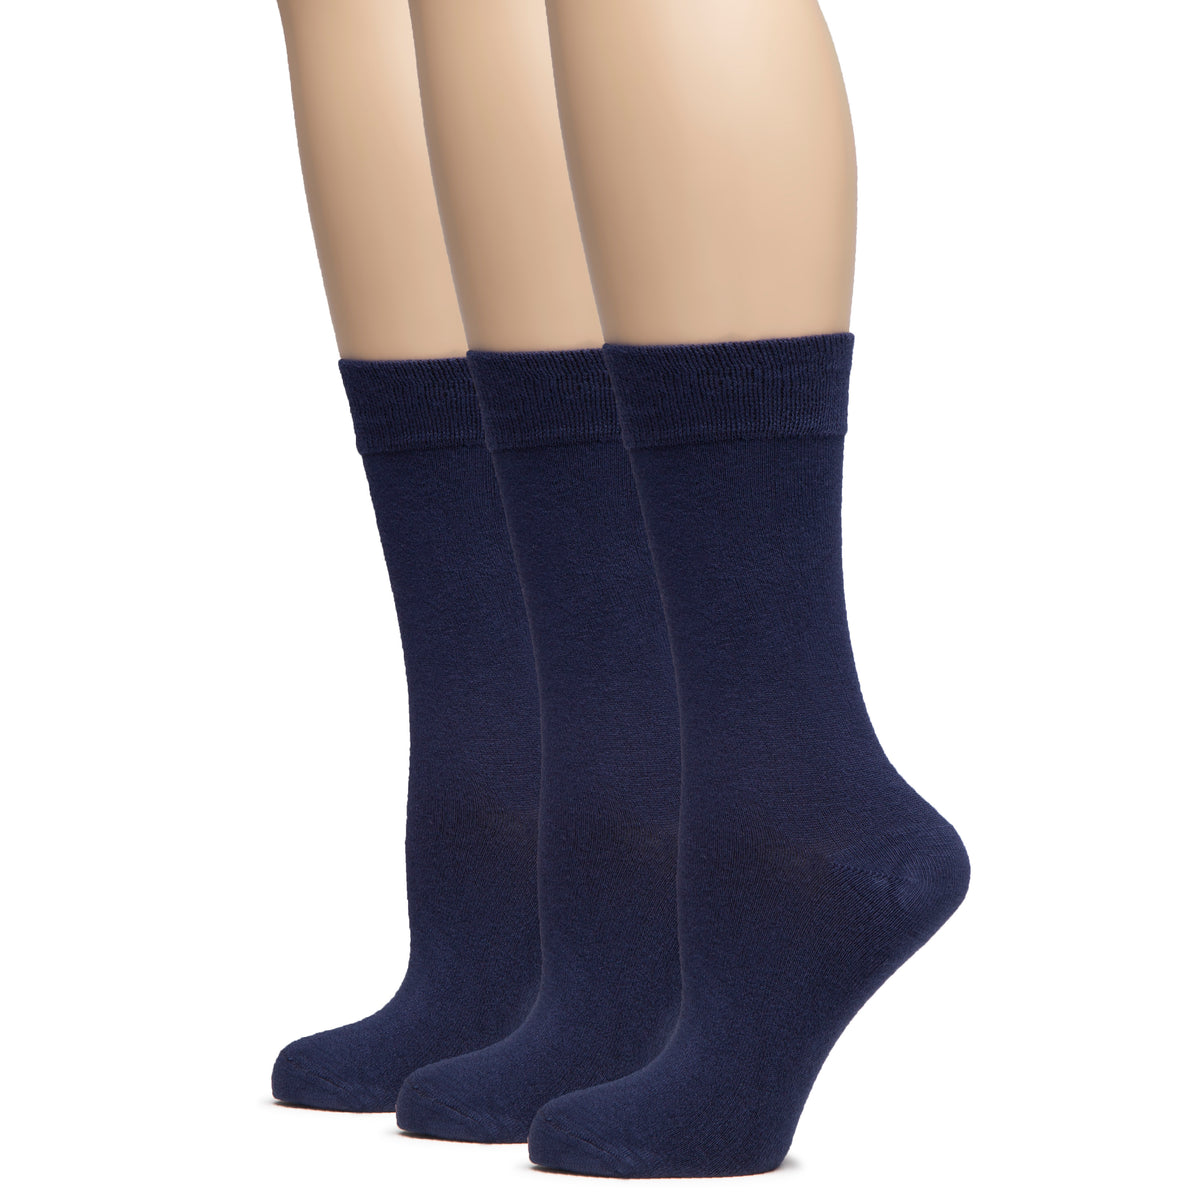 Hugh Ugoli Women's Bamboo Dress Socks Crew Soft Comfy Seamless Toe, 3 Pairs, Shoe Size: 5-8/9-11 | Shoe Size: 9-11 | Navy Blue